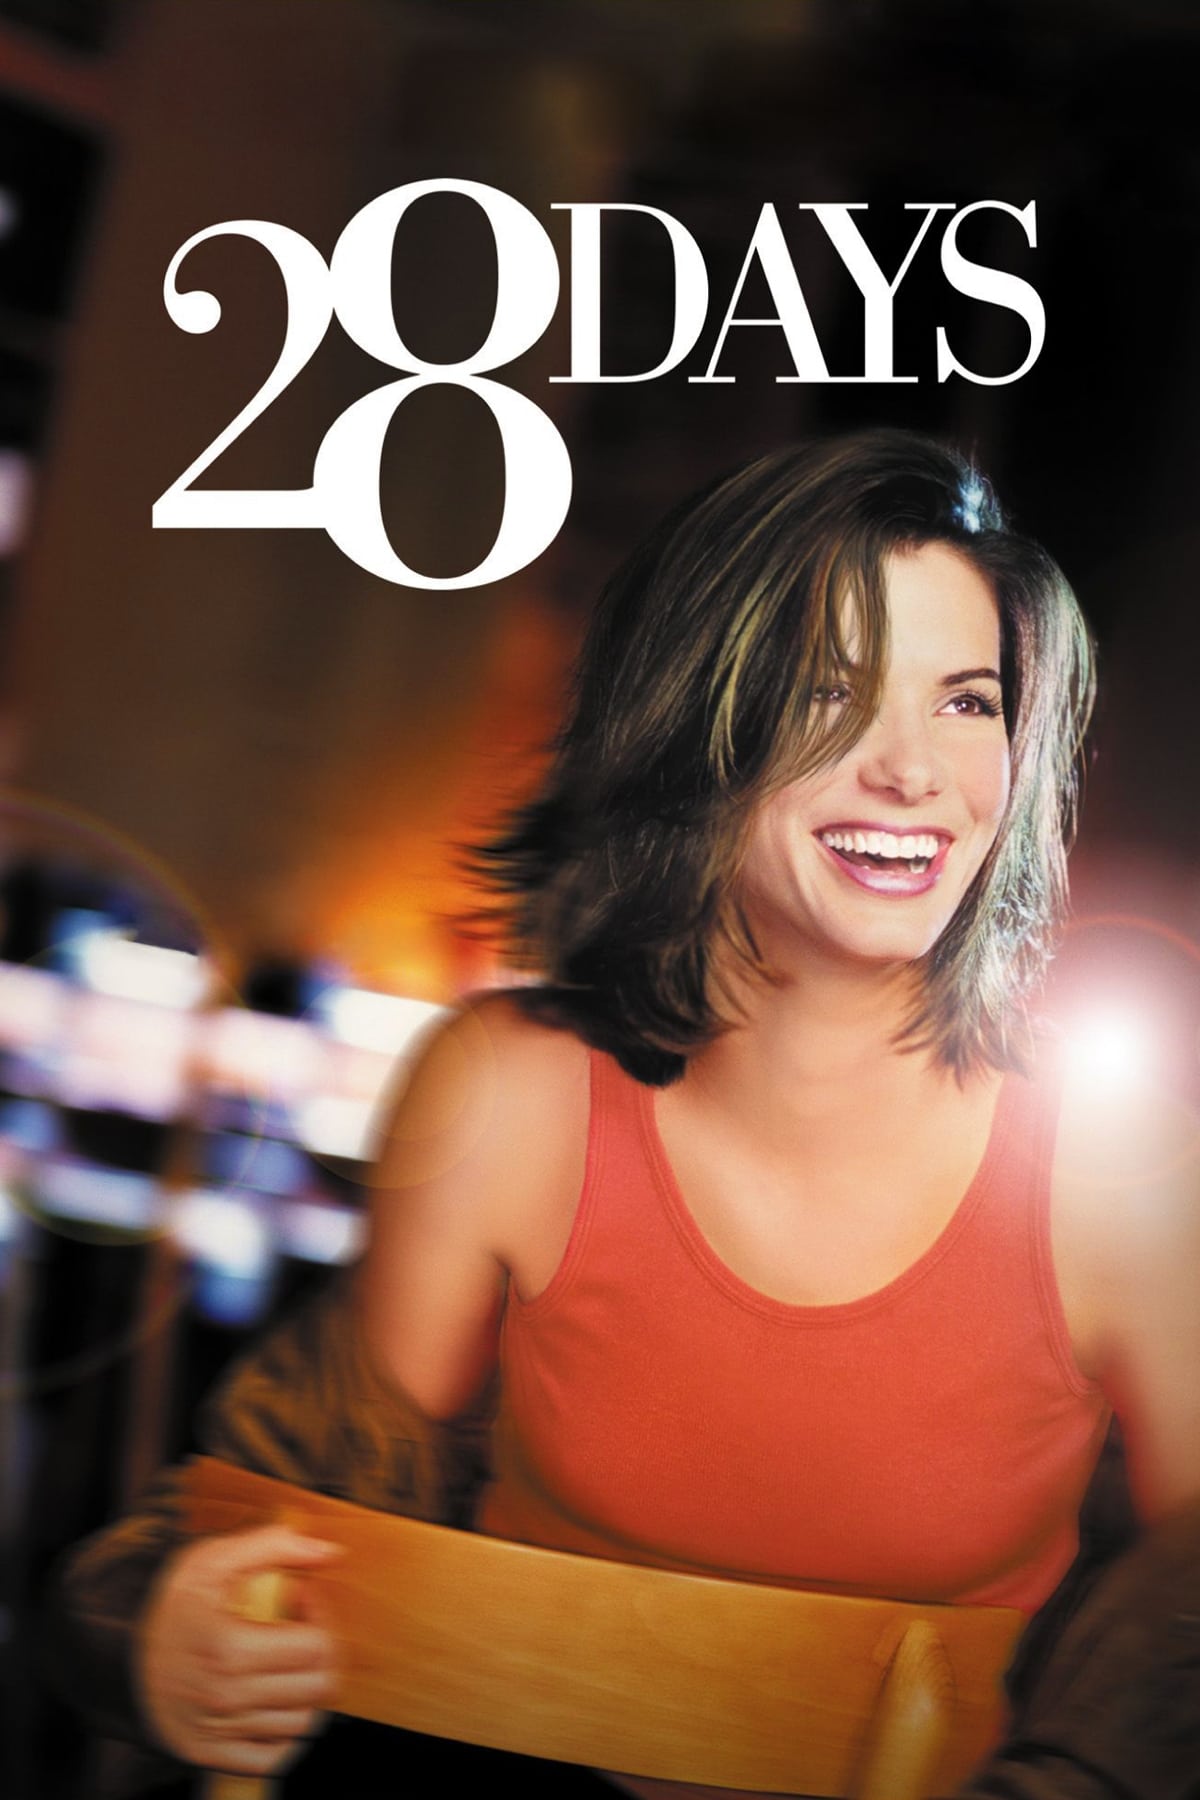 Affiche du film 28 Days poster